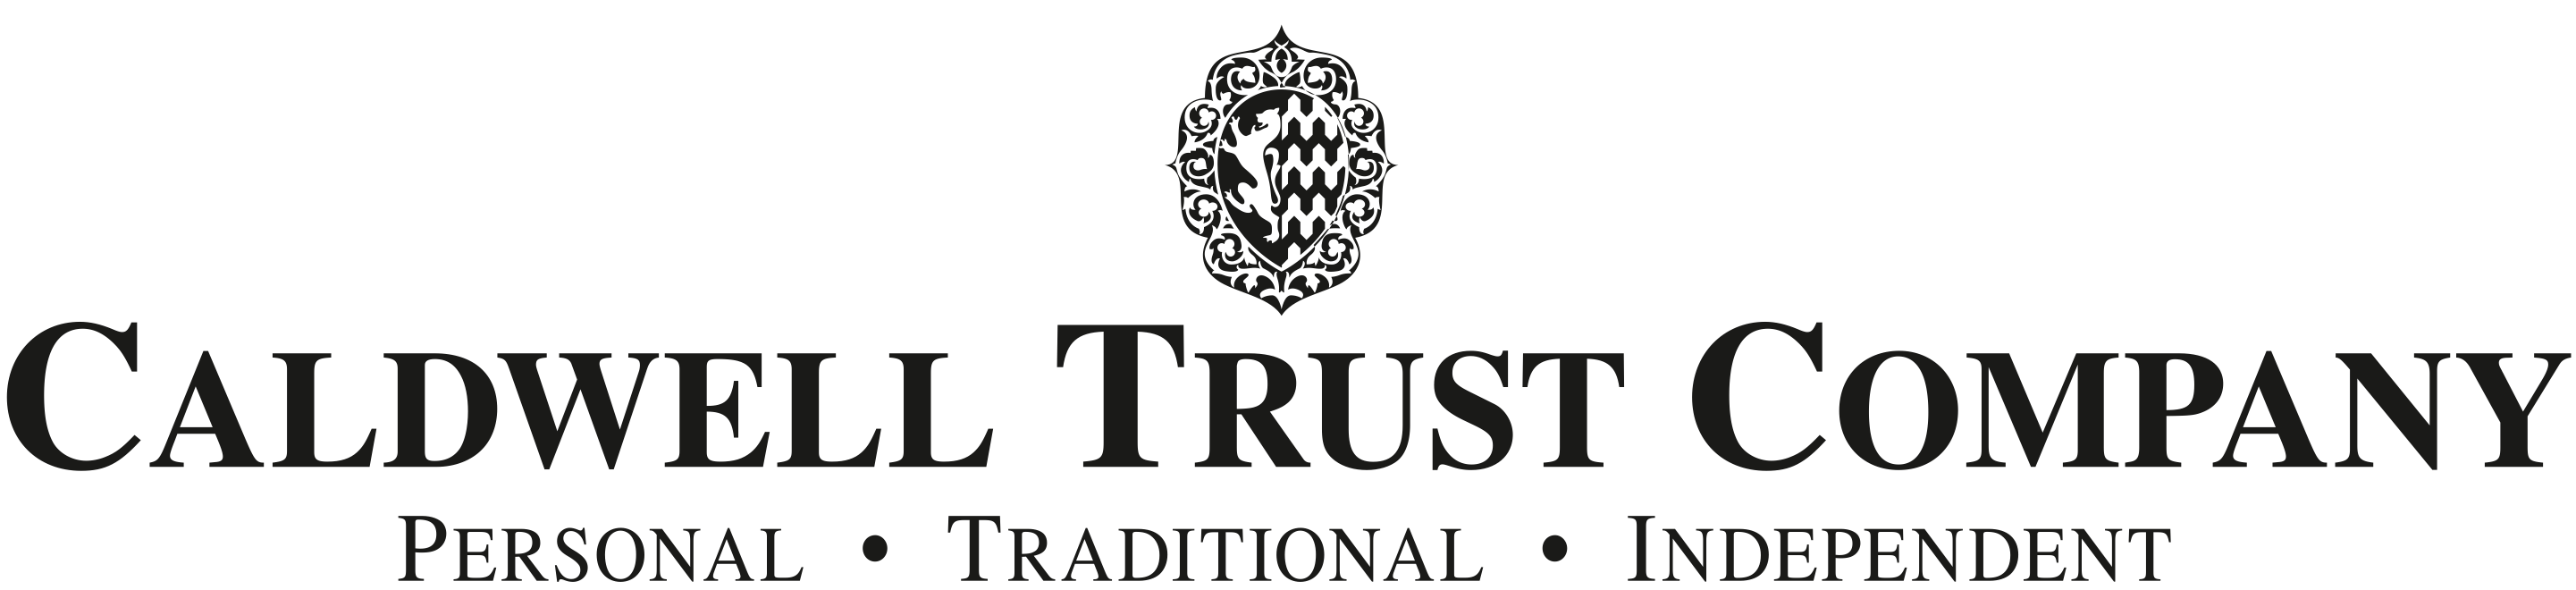 Caldwell Trust Company Logo